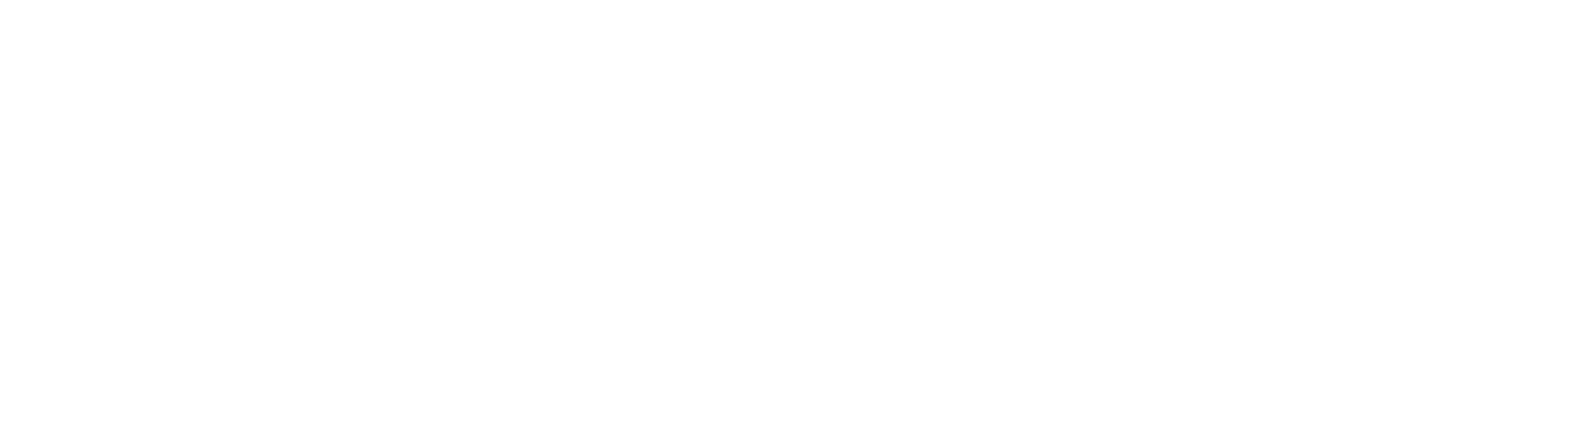 MoonLake Immunotherapeutics logo large for dark backgrounds (transparent PNG)